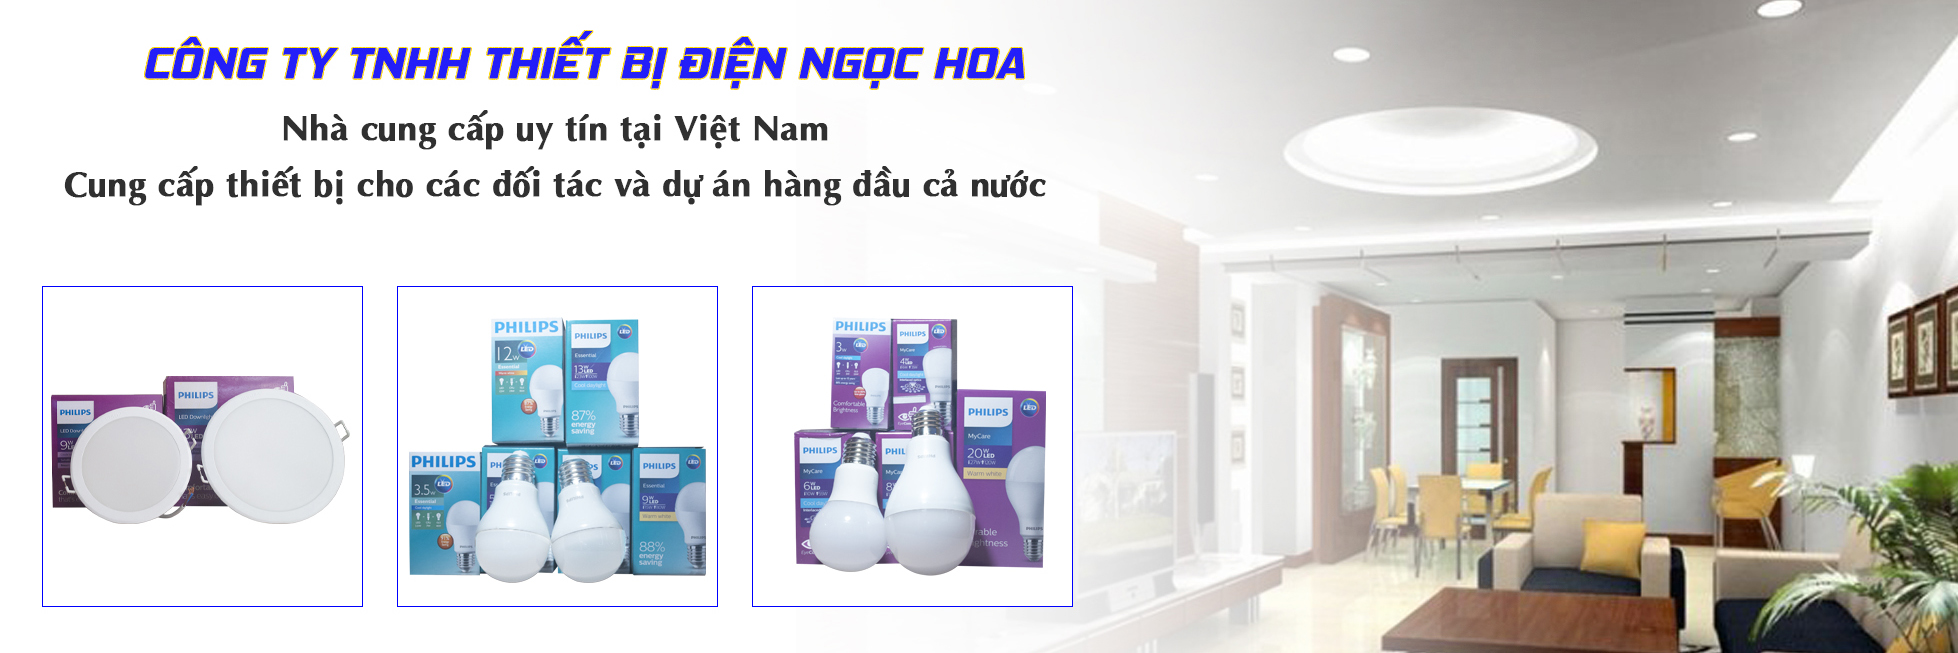 Thiet Bi Dien Ngoc Hoa